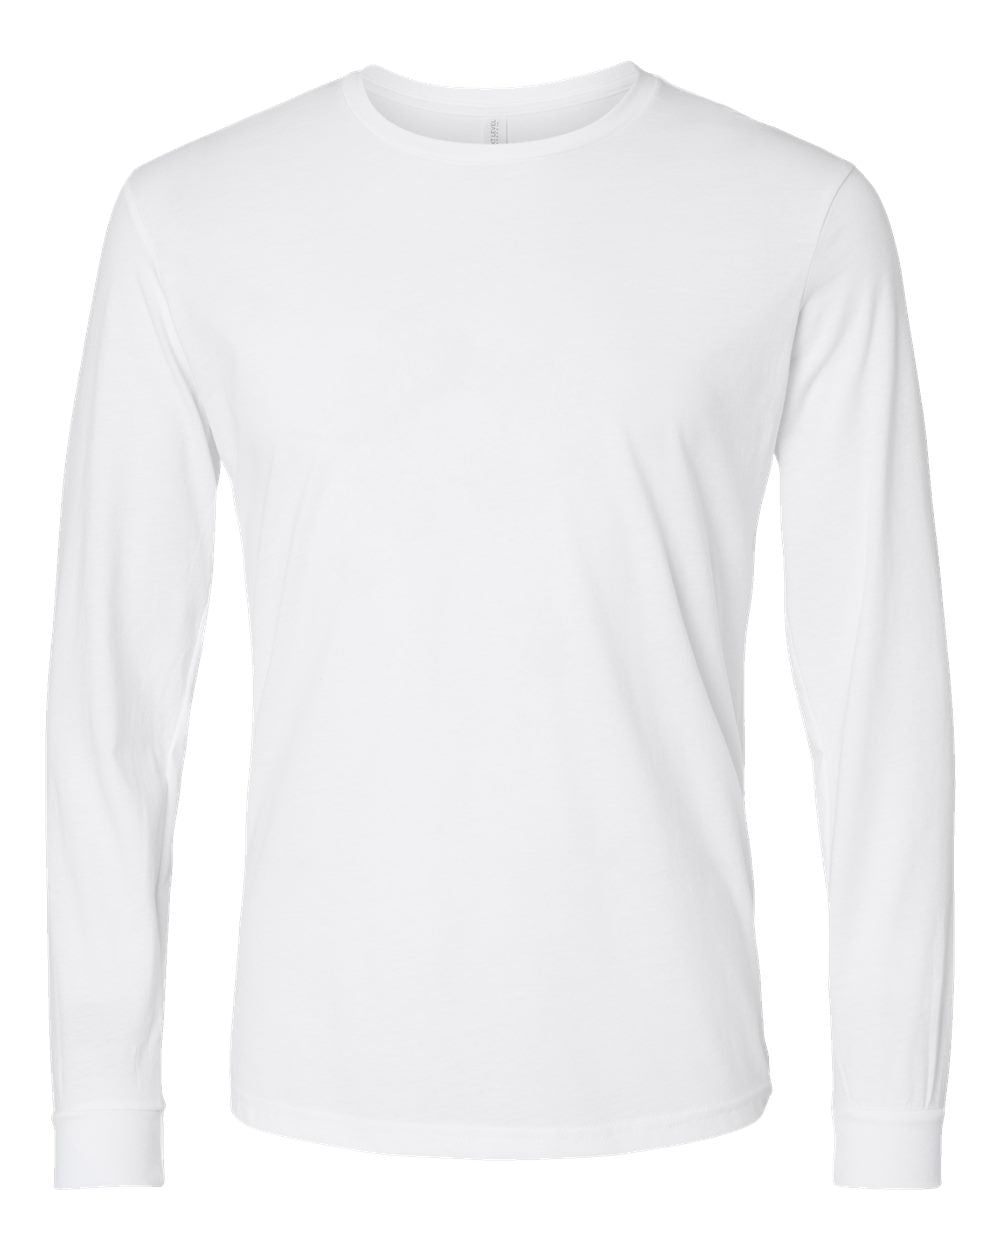 Pretreated Next Level 6211 Unisex CVC Long Sleeve T-Shirt – CheaterTee